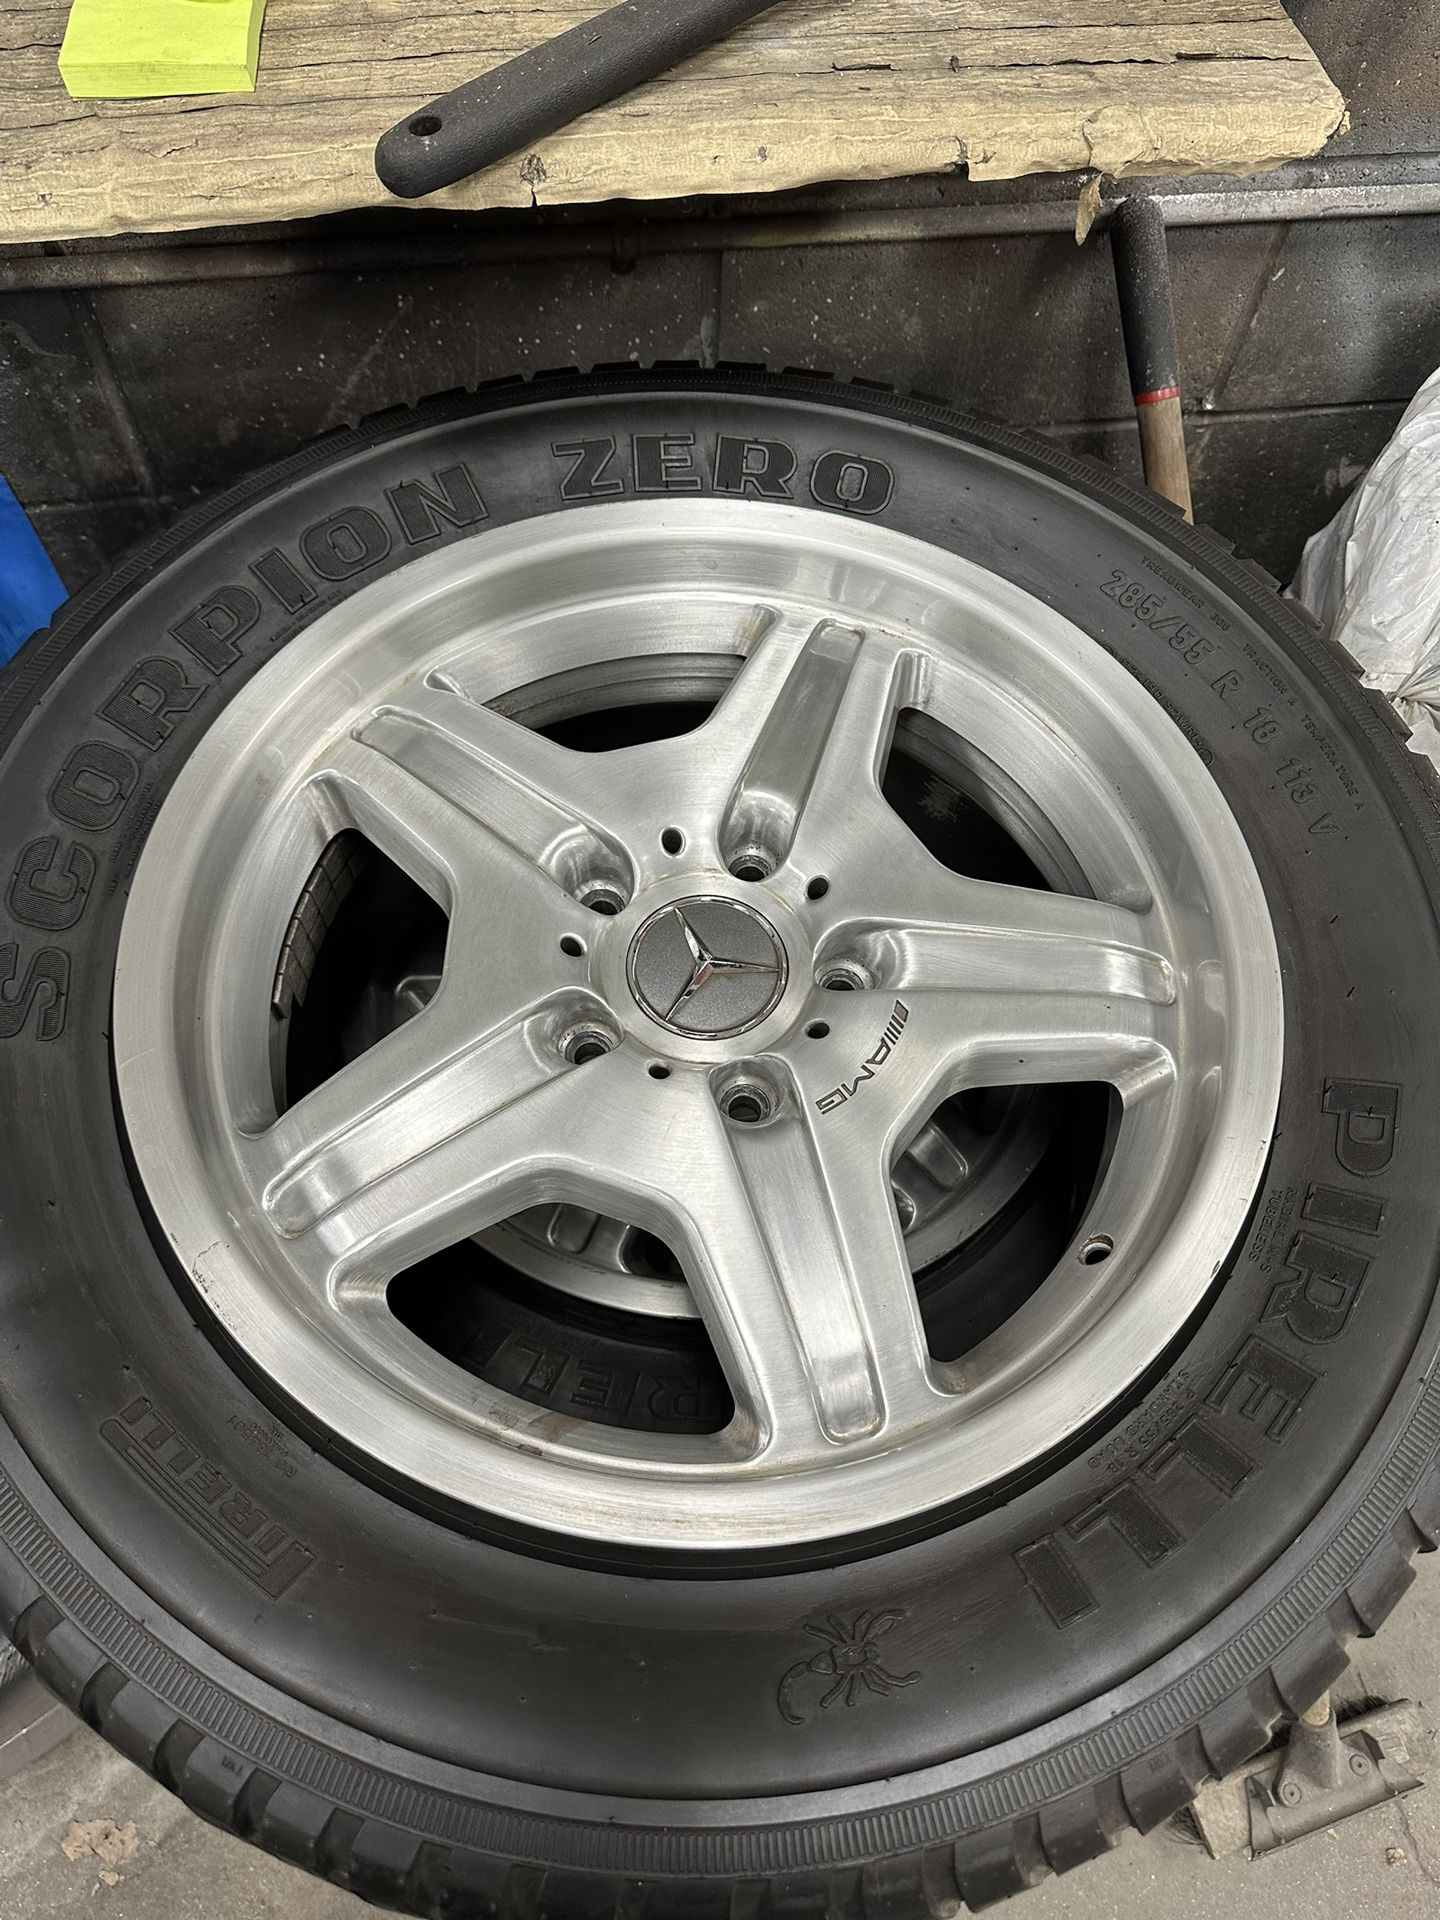 Merceds G-Wagon 18” G550 Wheels. Rims And Tires. 2012-2018 Factory Rims.